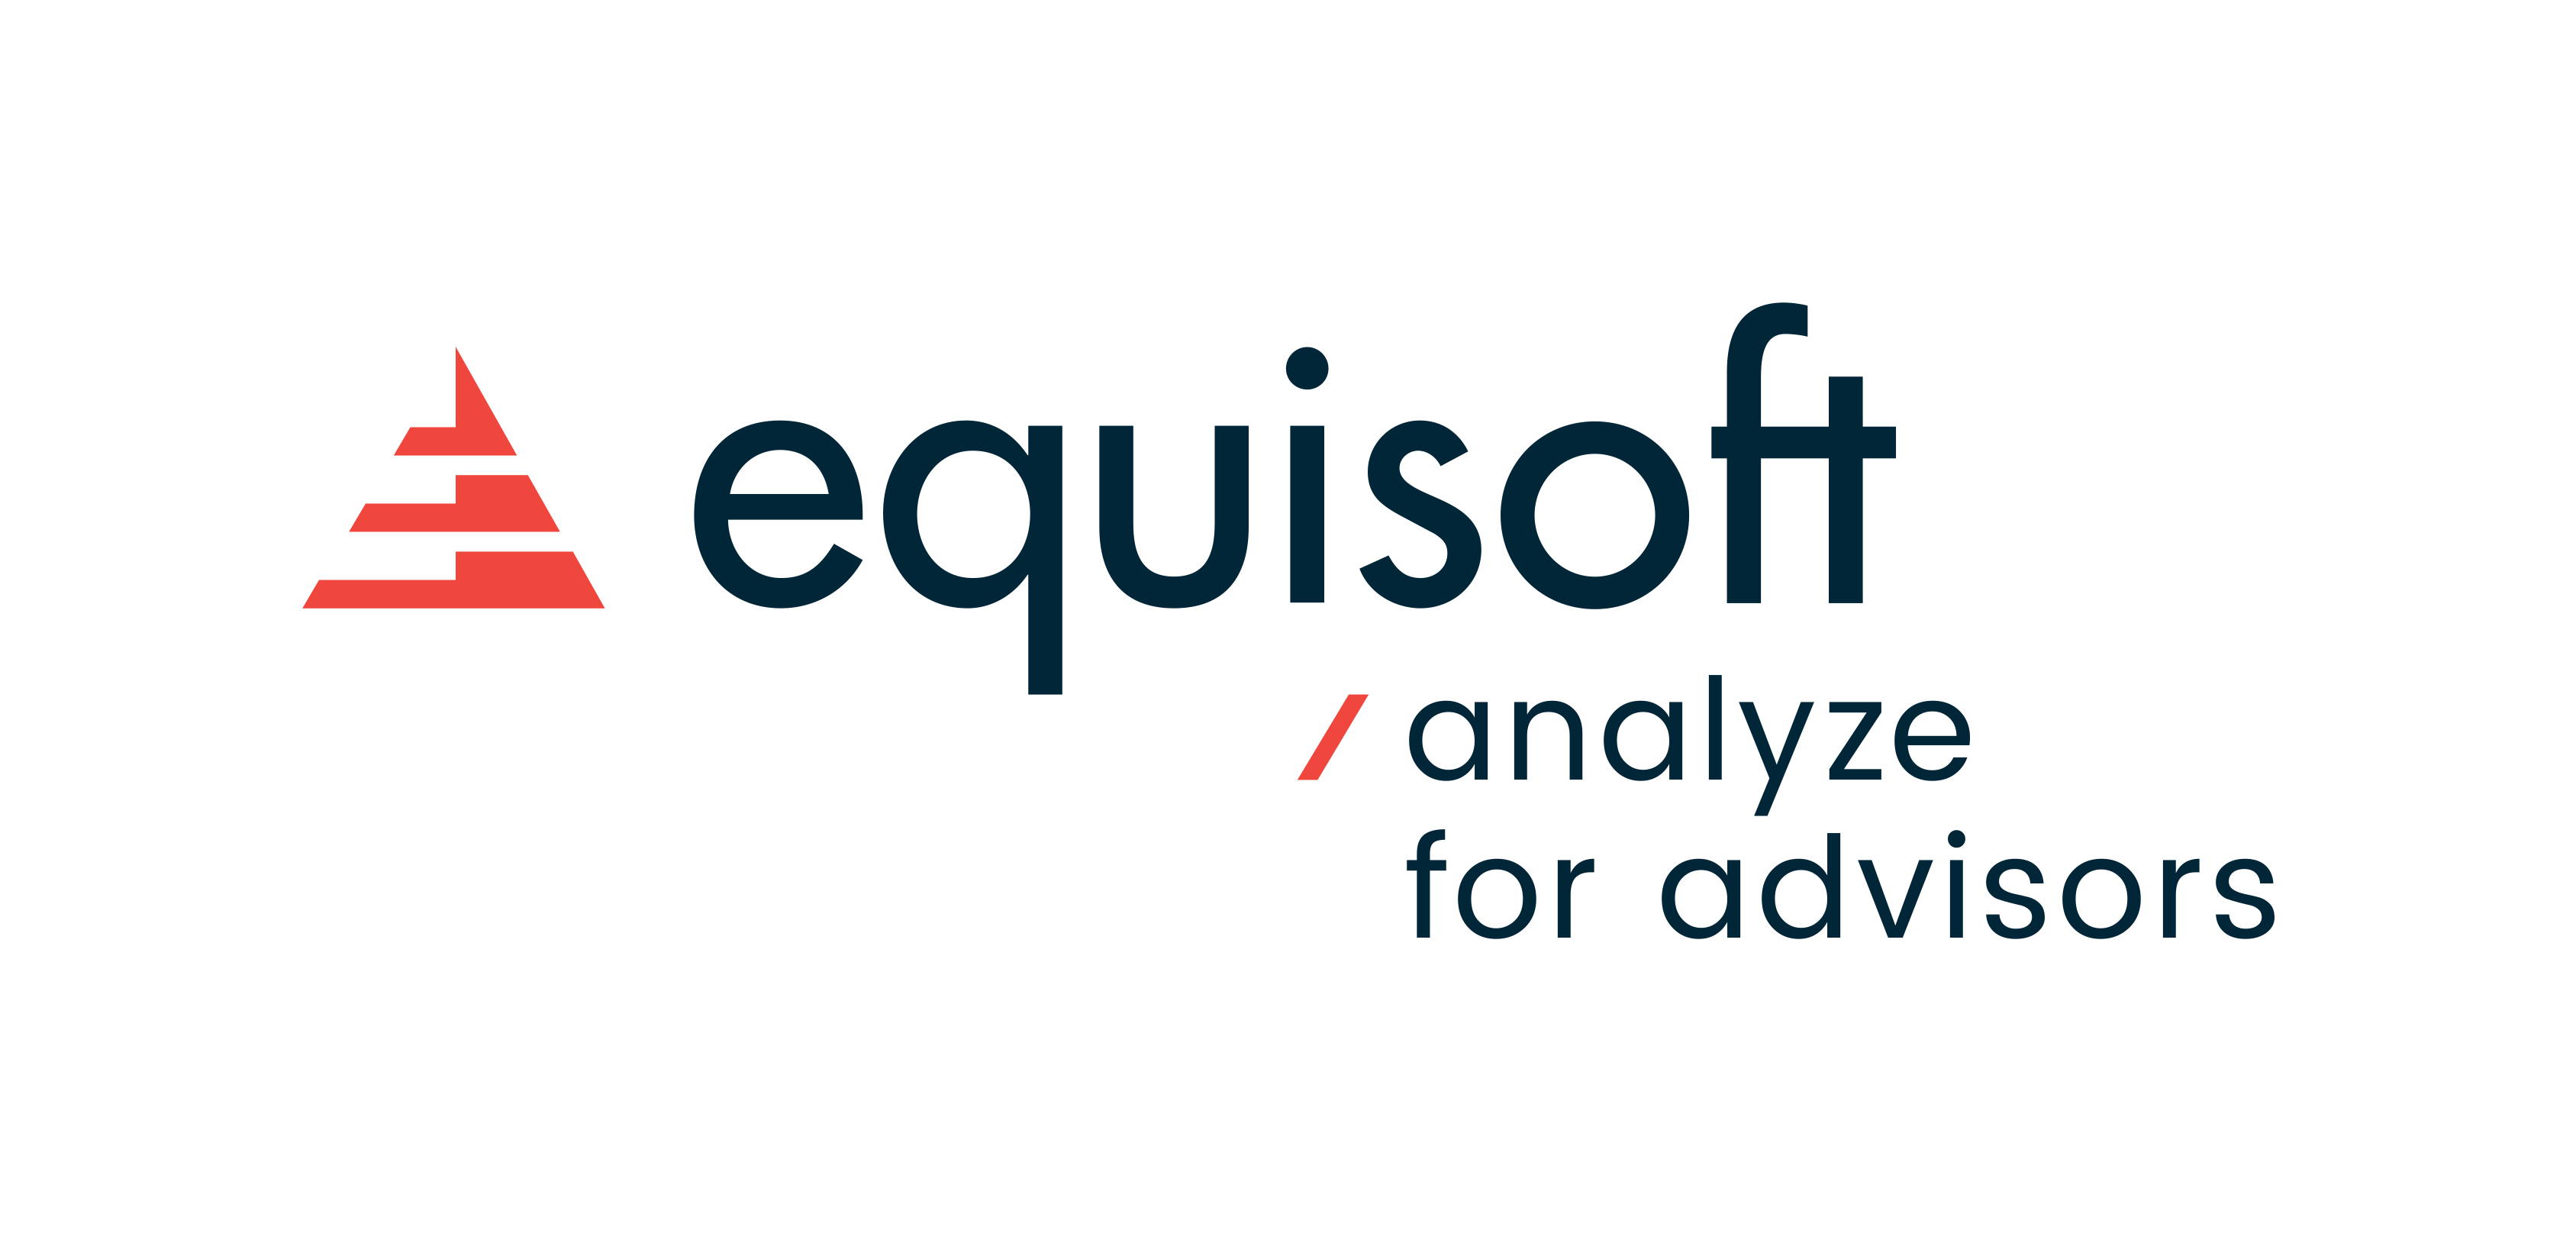 Equisoft/analyze for advisors